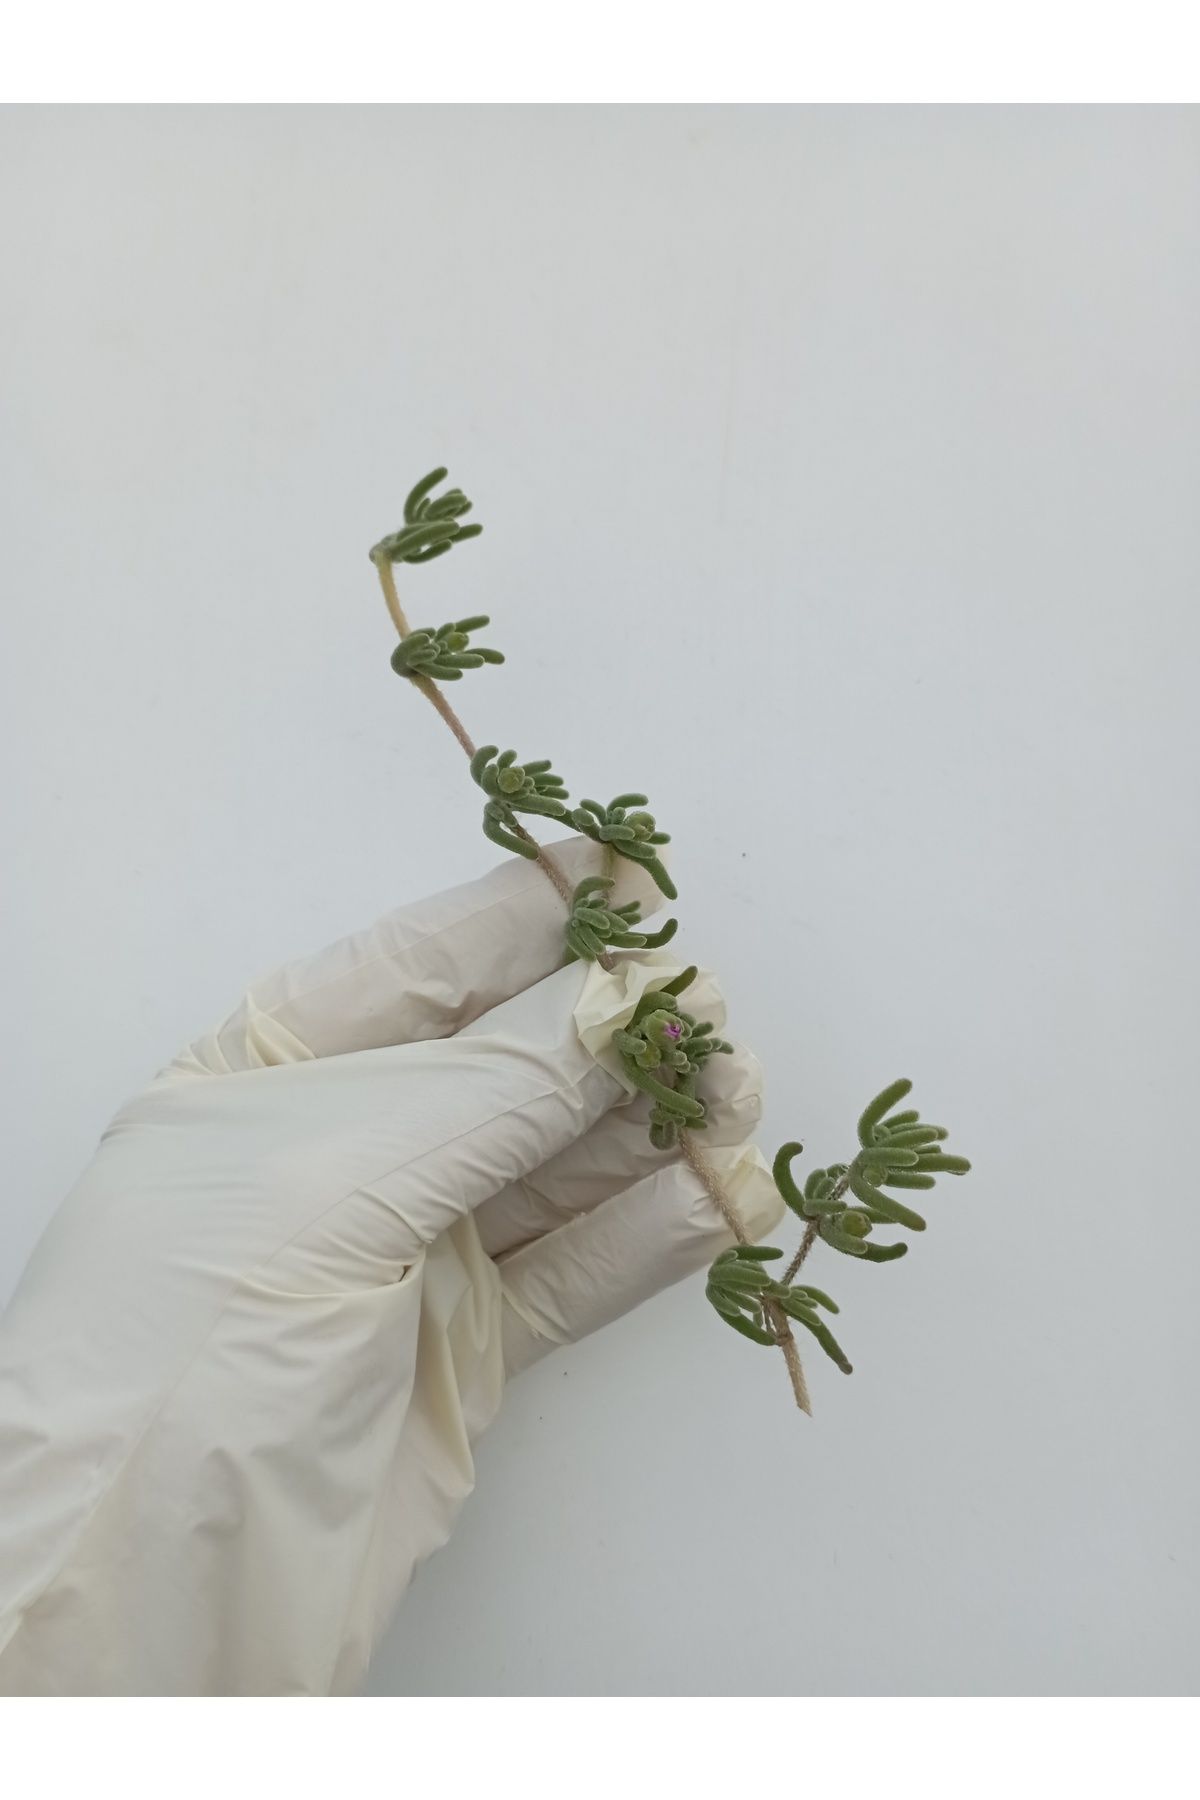 bahçehobisi Acem Halısı ( 3 Adet Köksüz Fide) Drosanthemum Floribundum